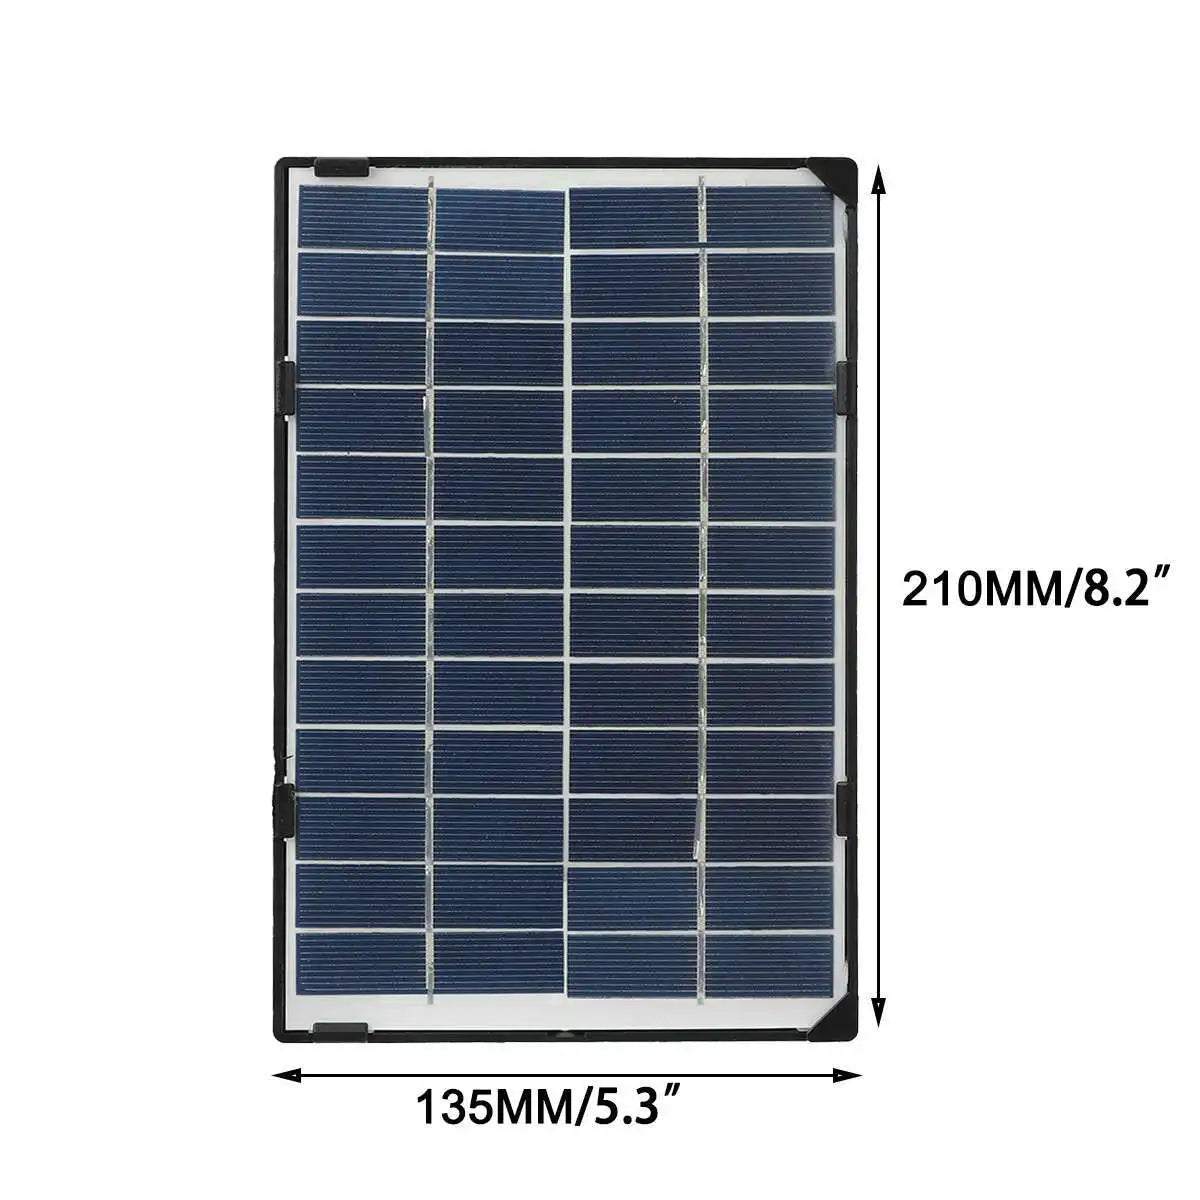 30W Portable Solar Panel, Solar panel specifications: 210x135mm, 30W capacity, origin Mainland China